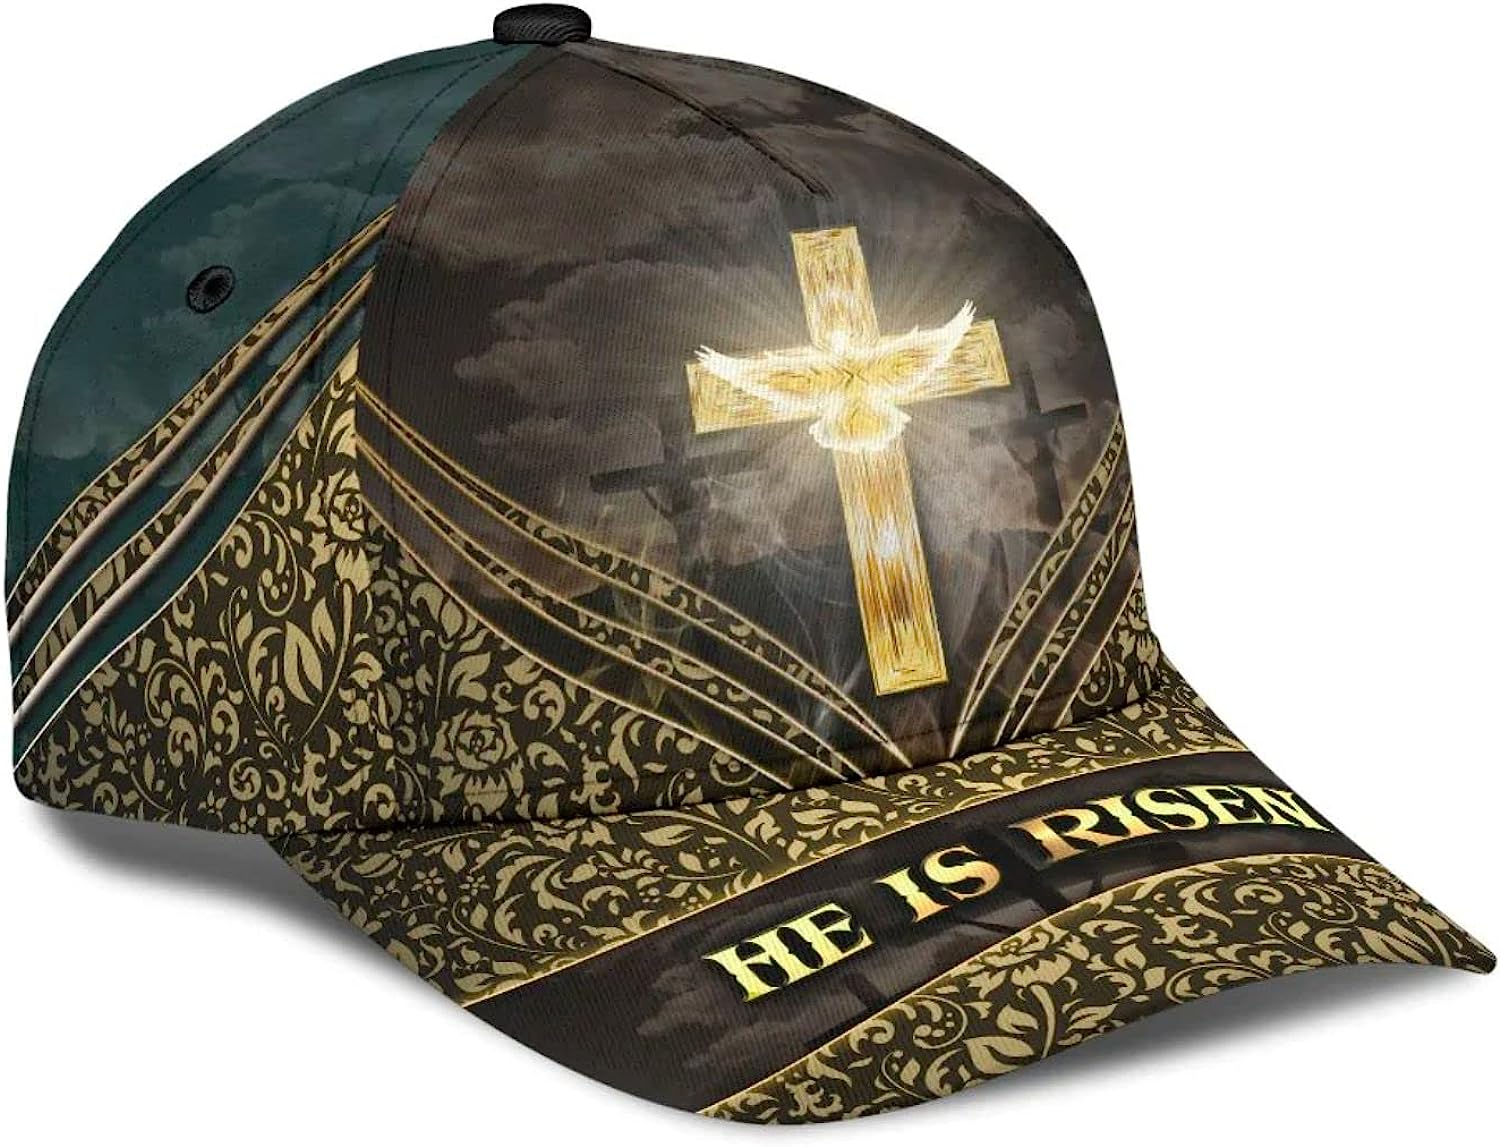 He Is Risen Cross Baseball Cap - Christian Hats for Men and Women